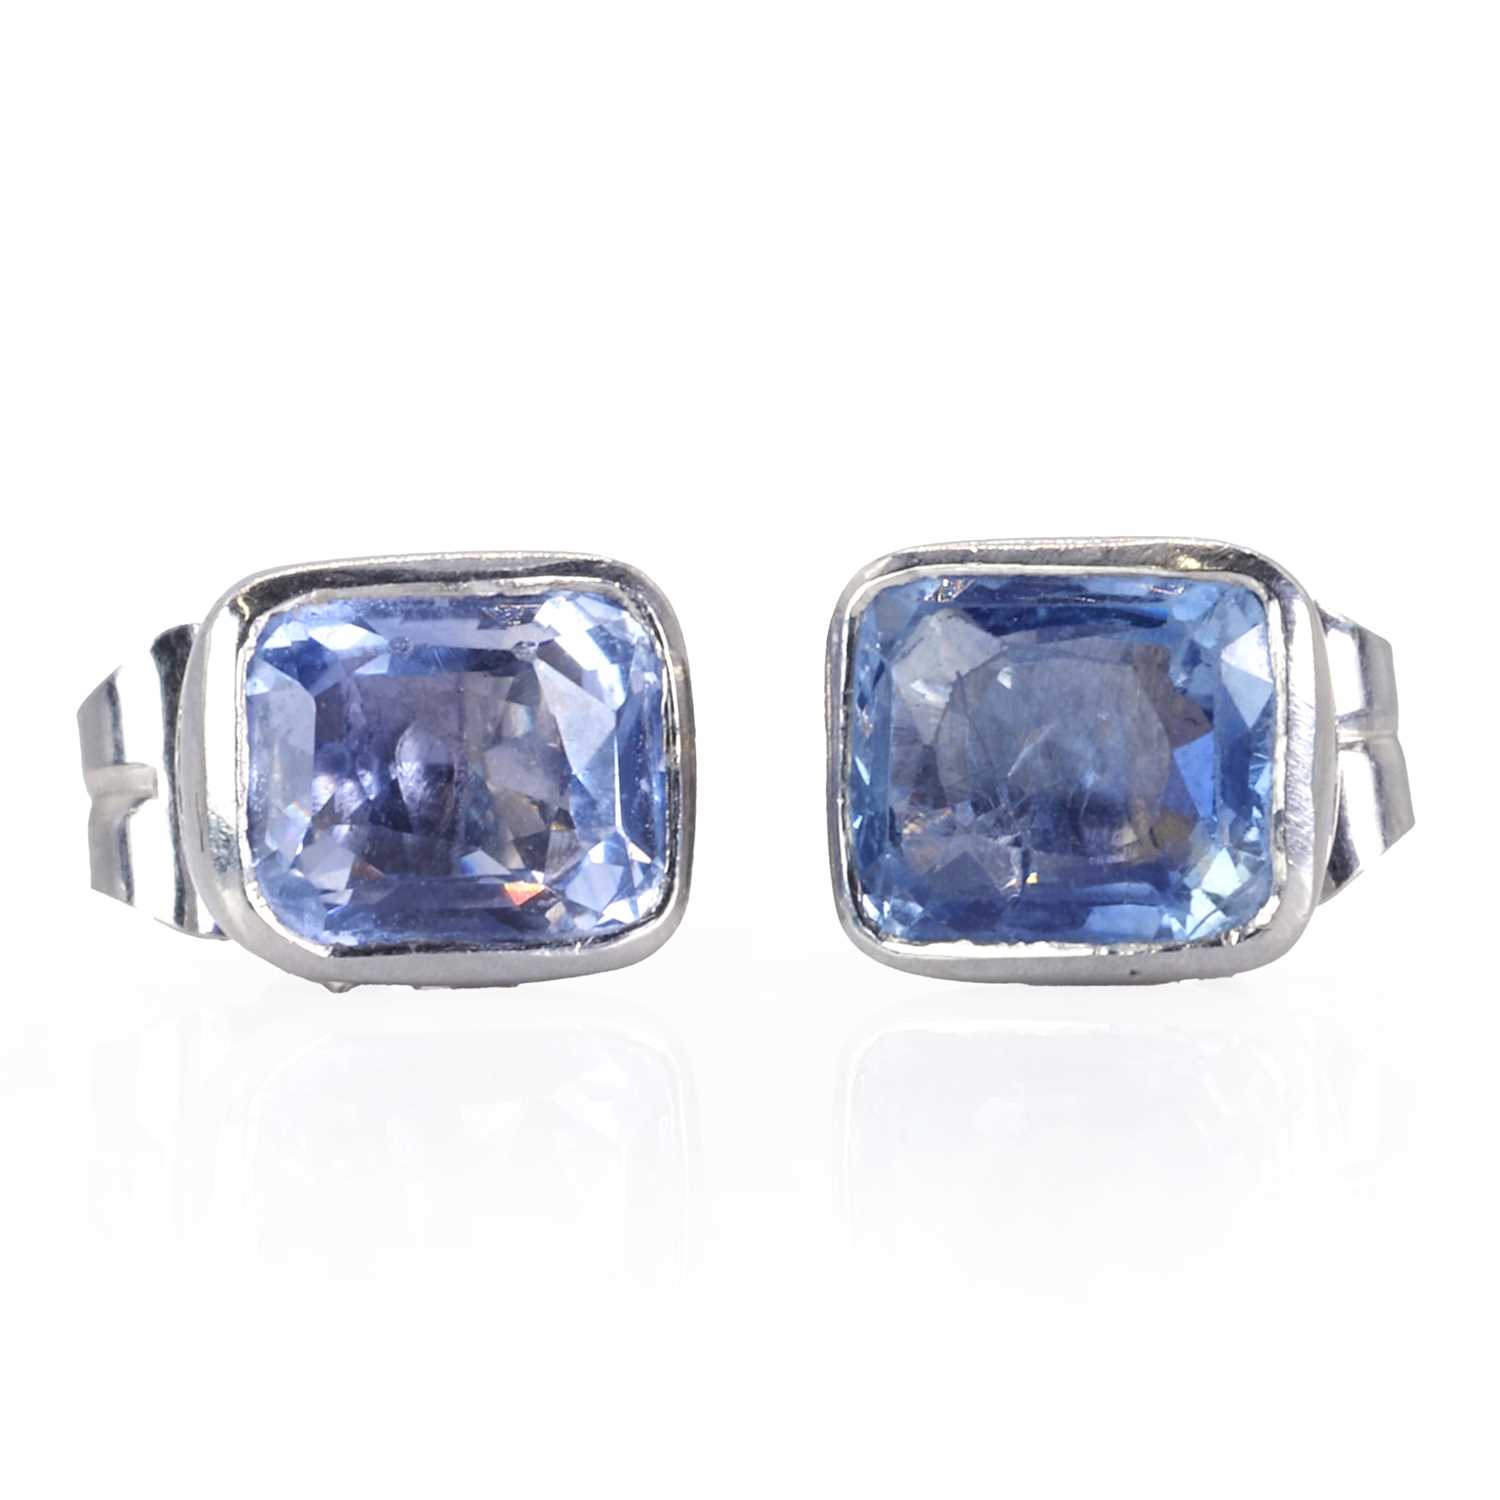 A pair of single stone cornflower blue sapphire stud earrings,